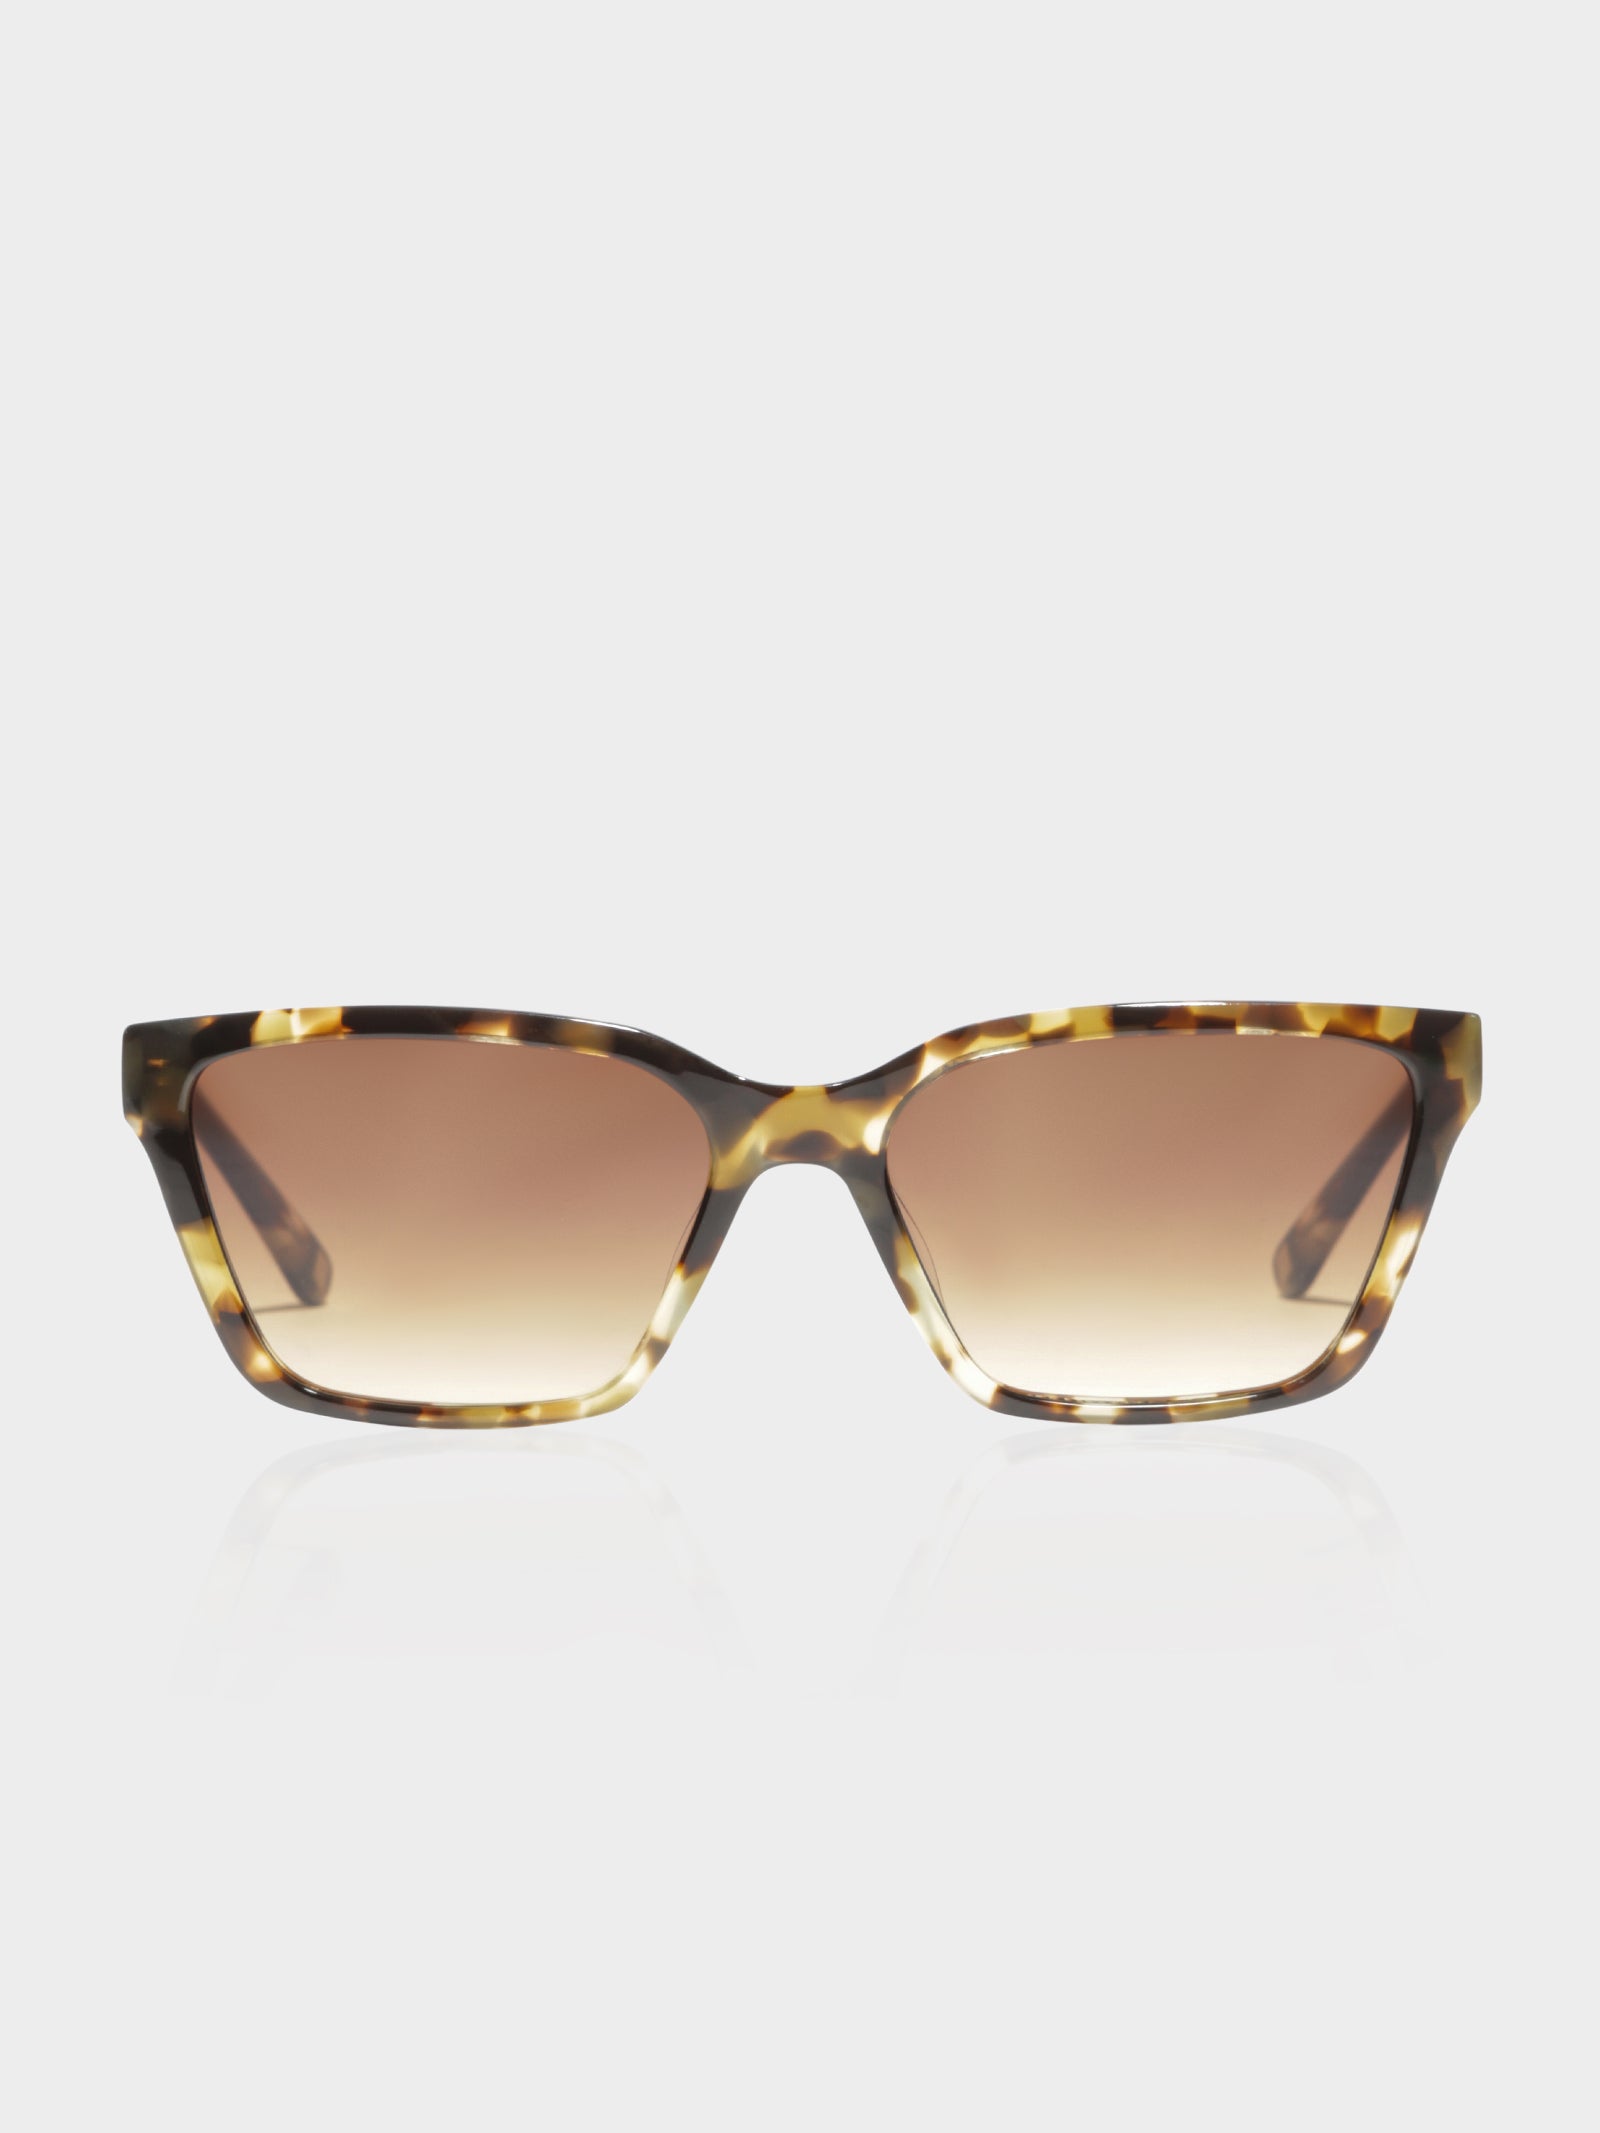 Carolina Lemke Sunglasses Available at Glue Store